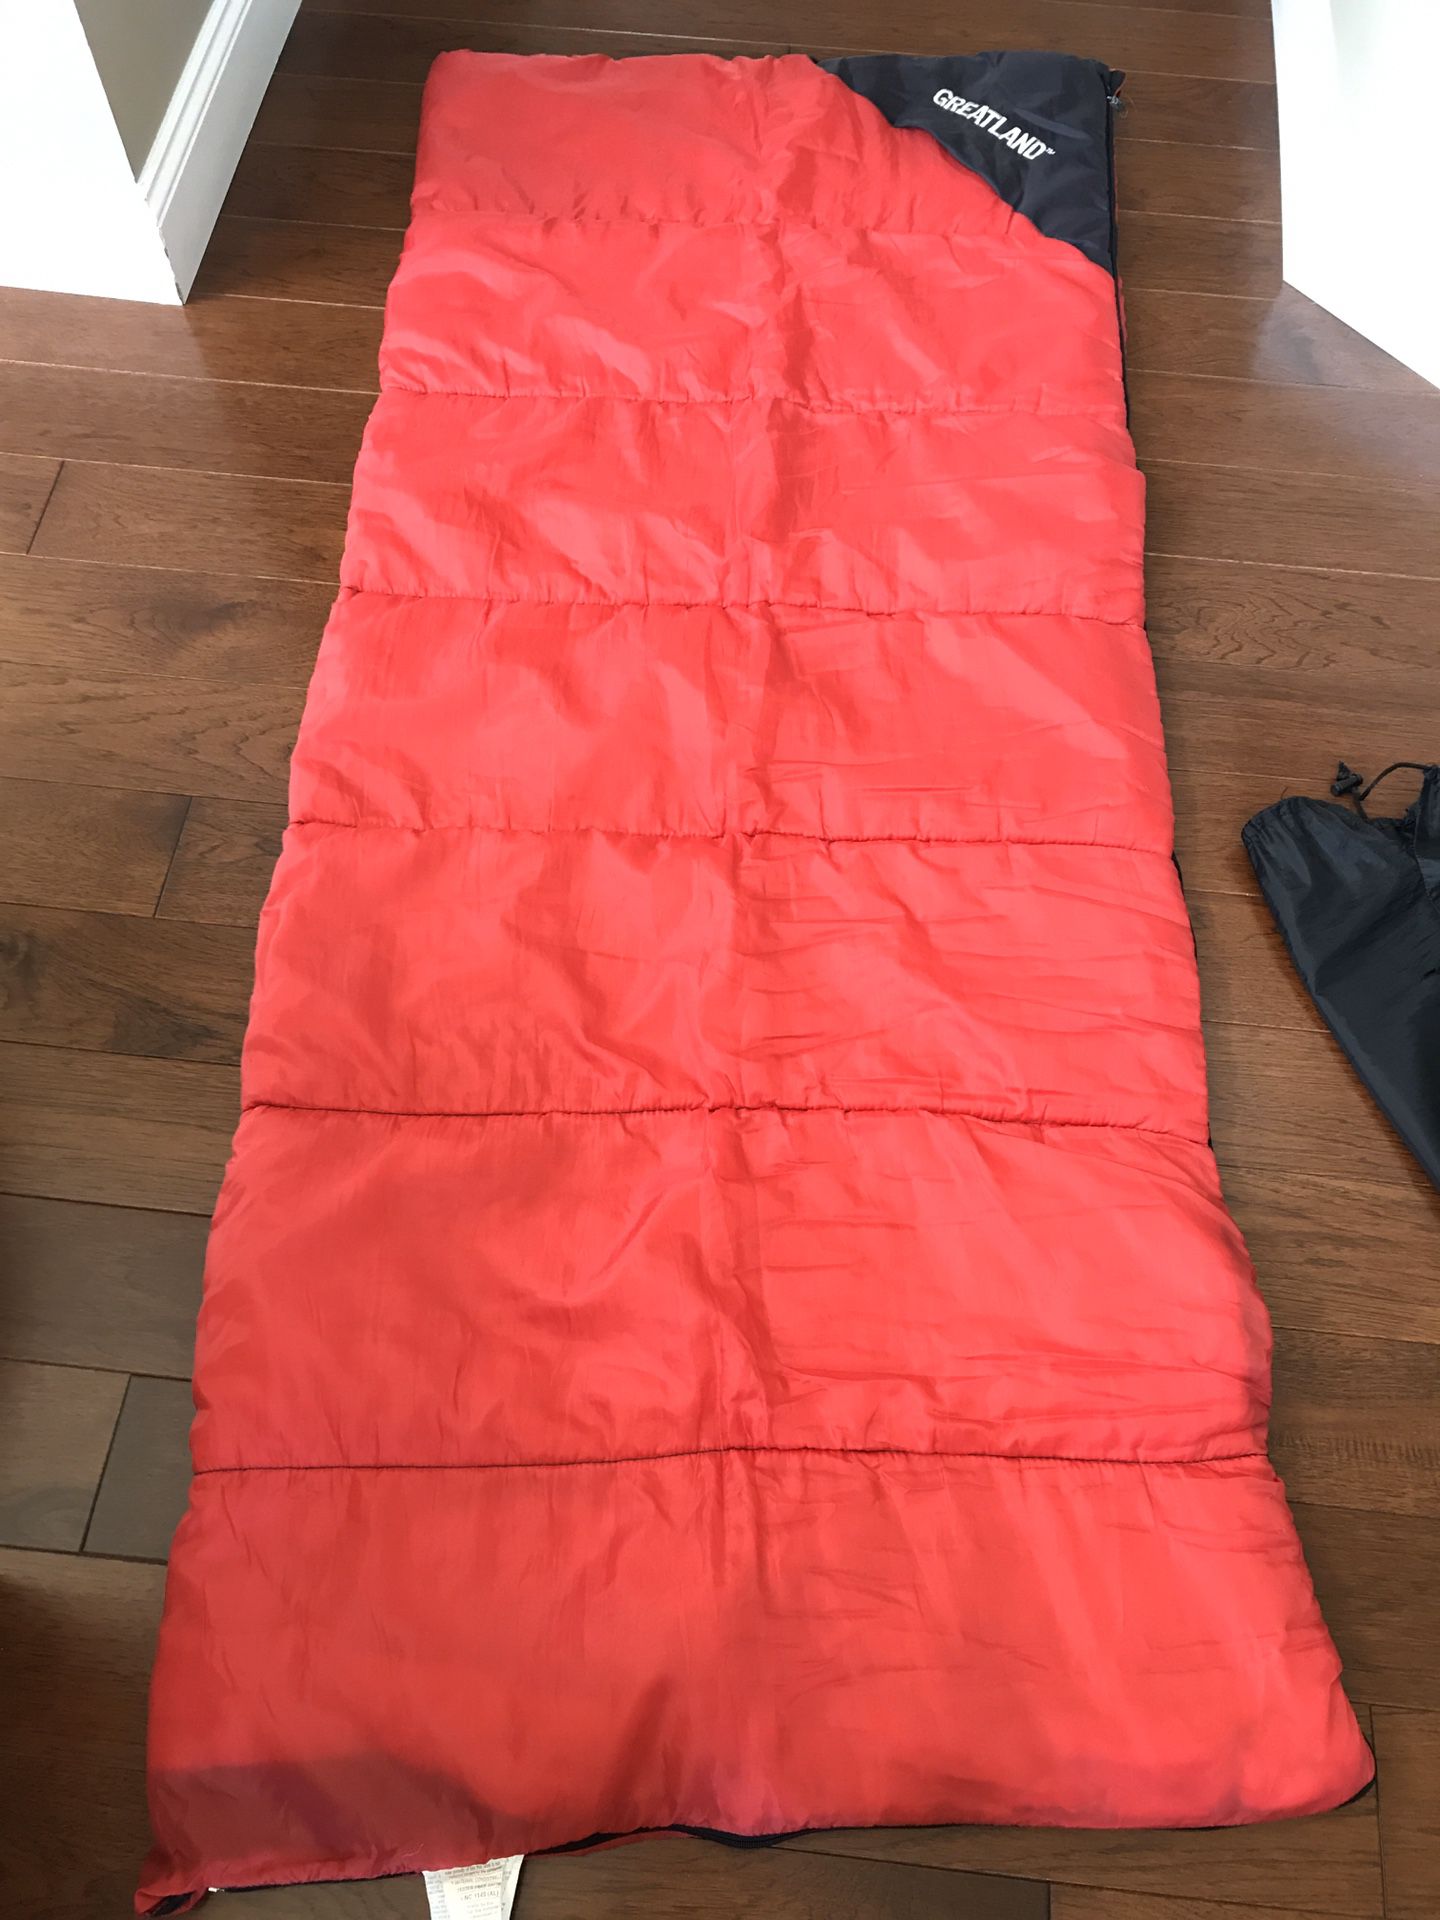 Rectangular sleeping bag with stuff sack